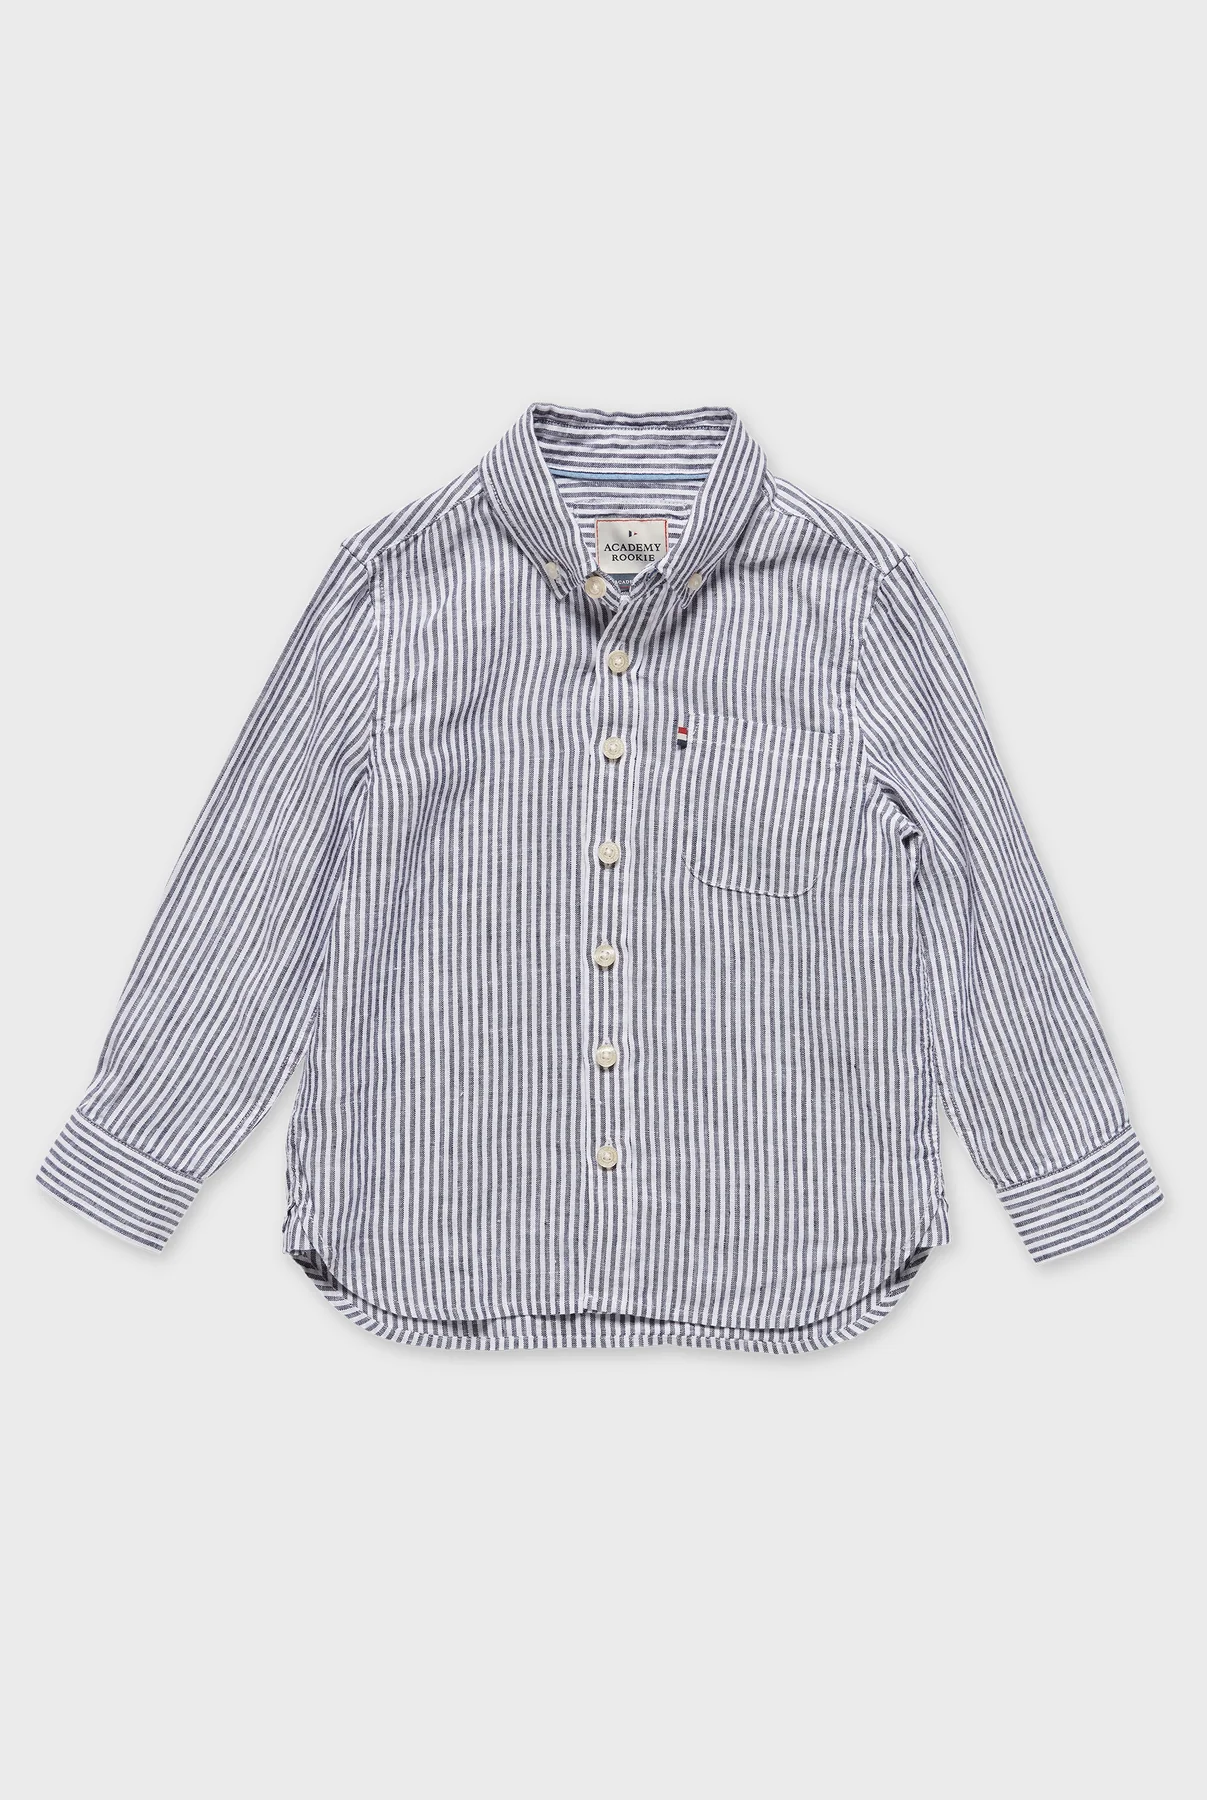 Academy Brand Kids Rory Linen Shirt - Navy | Kinfolk Collective